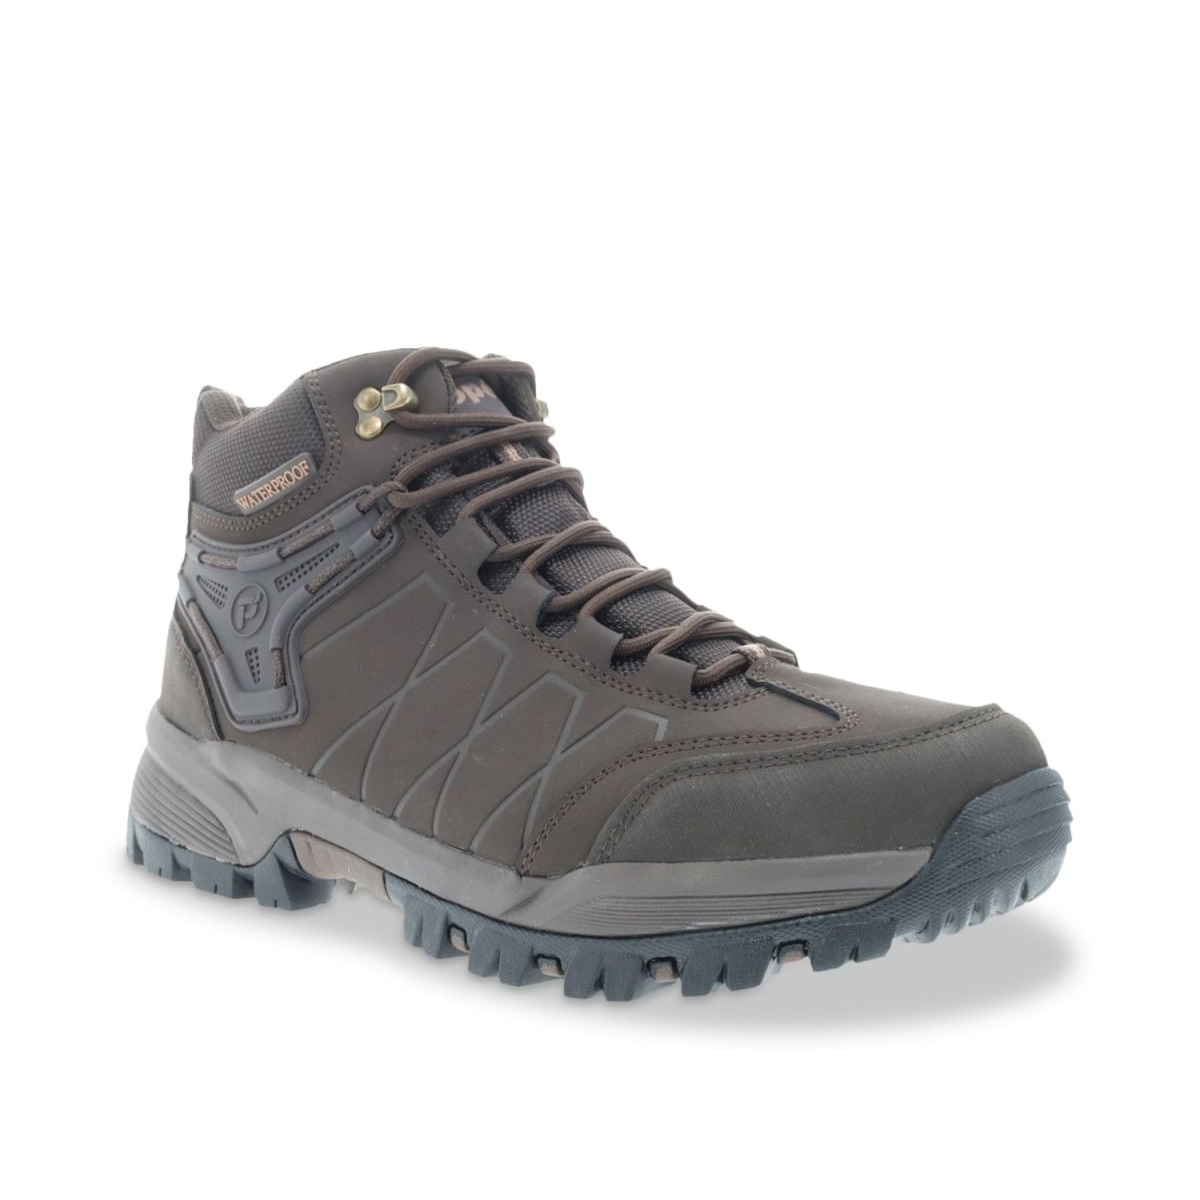 Propet Men's Ridge Walker Force Hiking Boots Dark Brown - MBA052LBR BROWN - BROWN, 10.5 XX-Wide